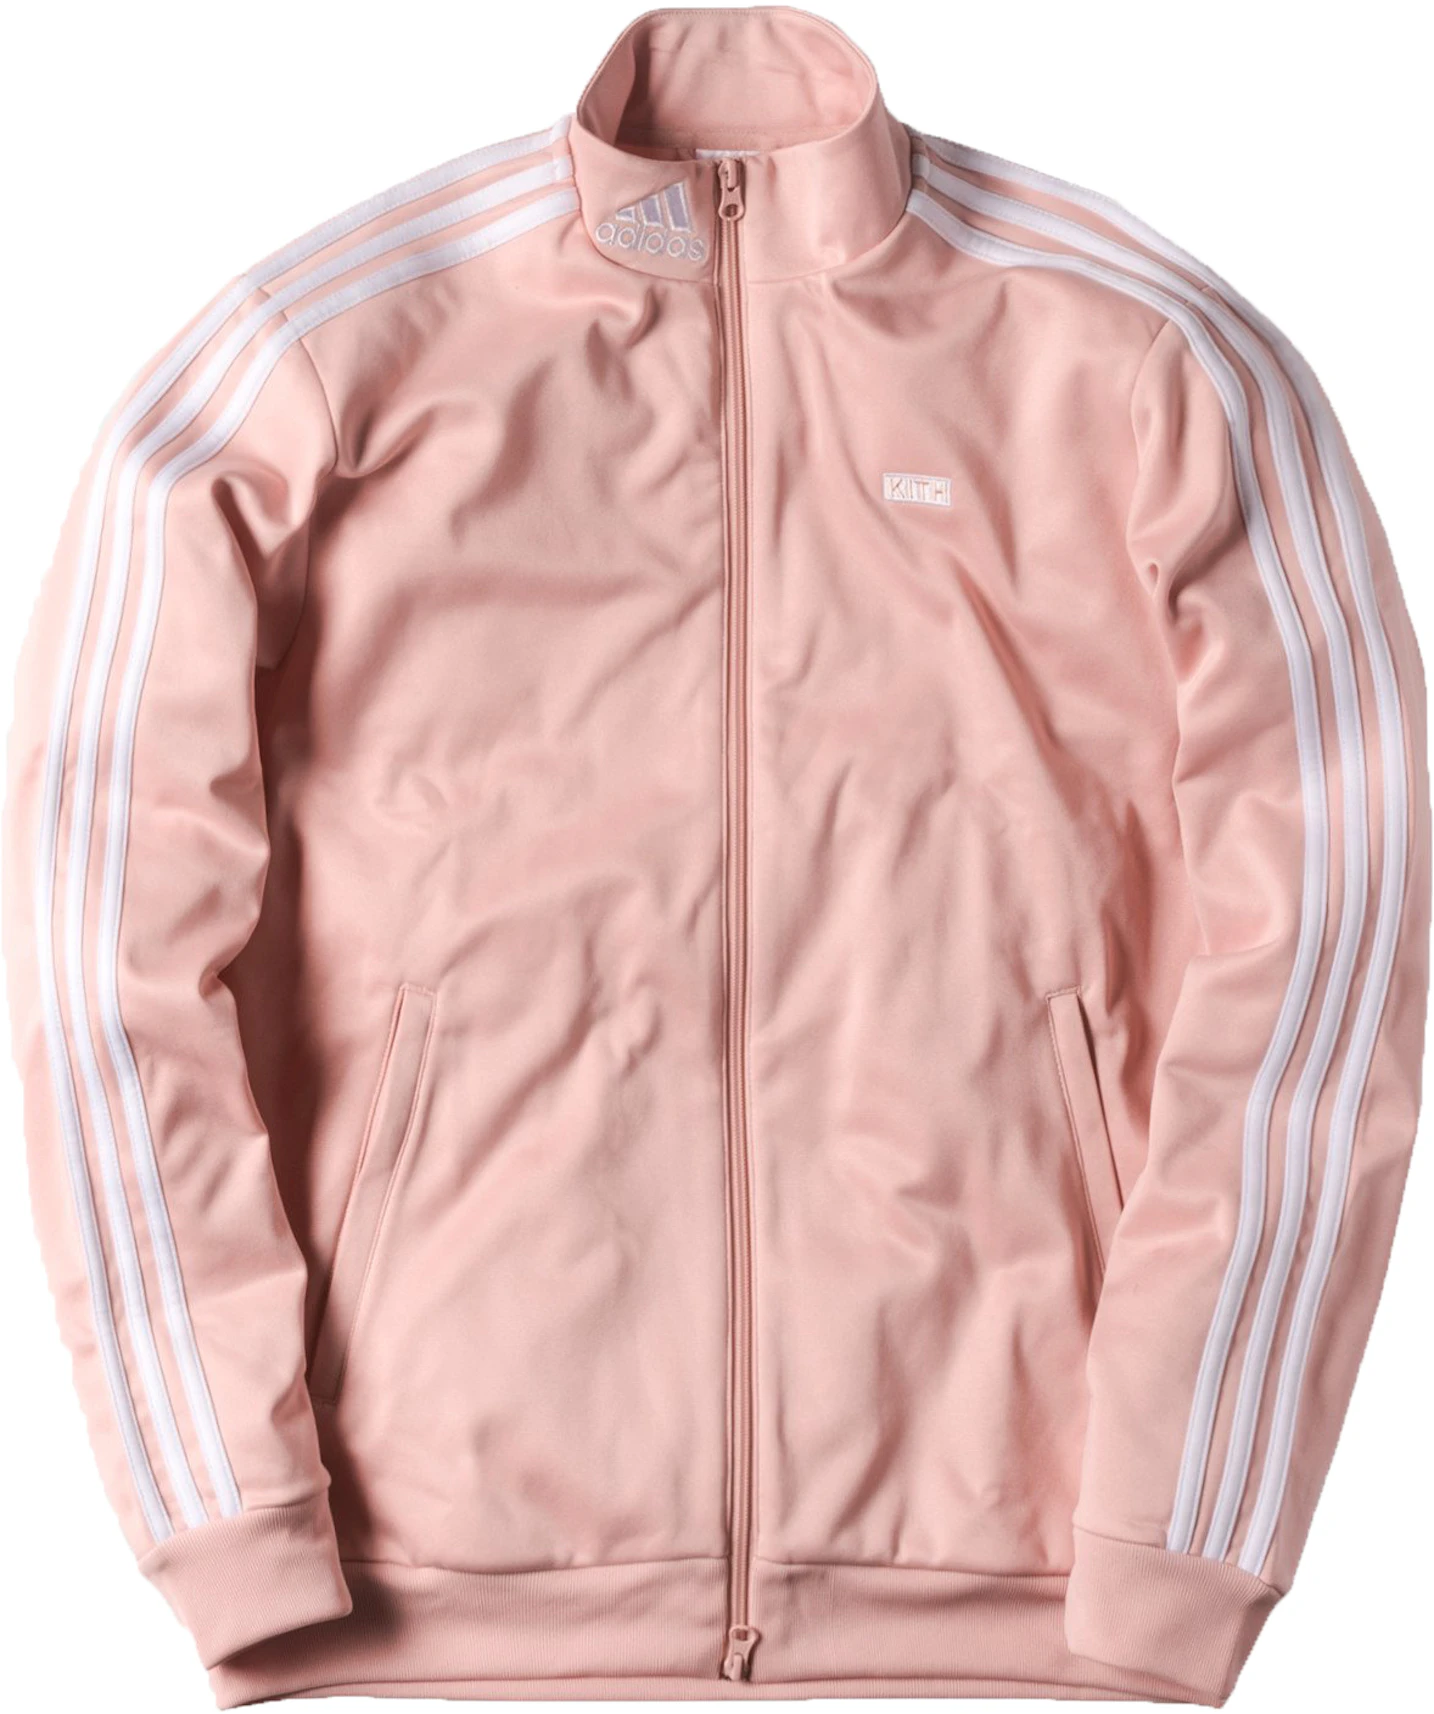 Flamingos Track Jacket Pink - SS17 -